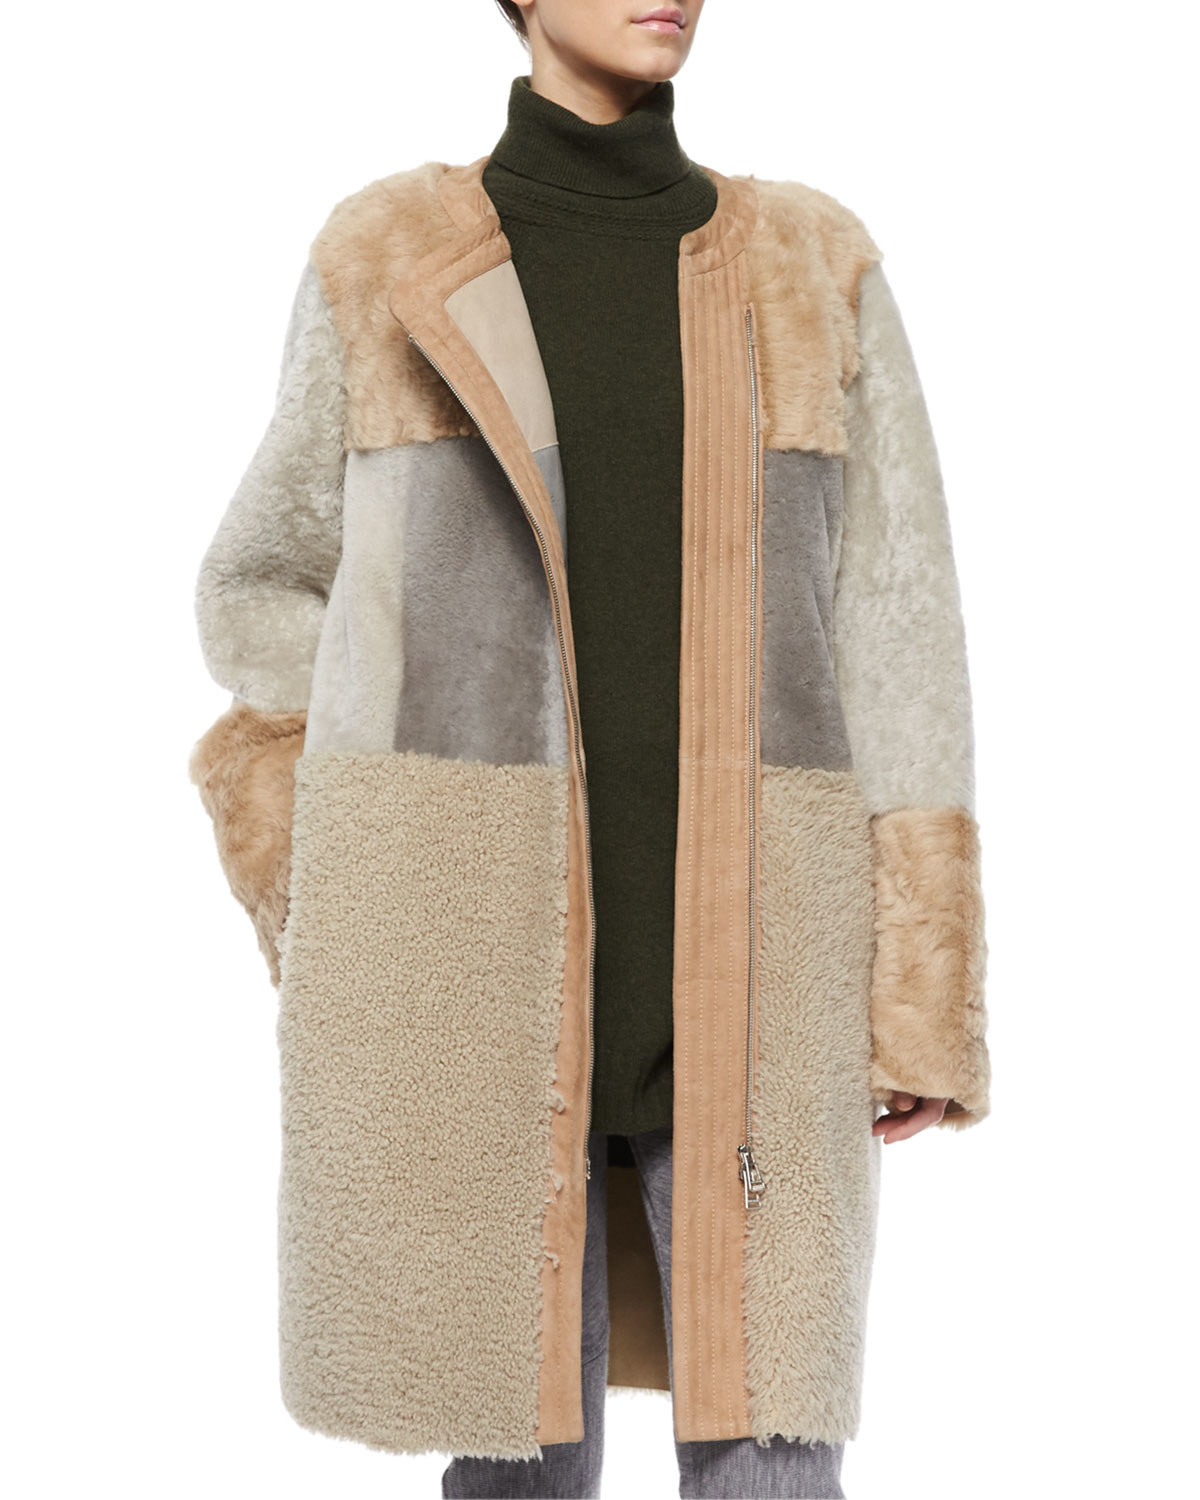 patchwork shearling coat - Google Search | Sheepskin coat, Coat ...